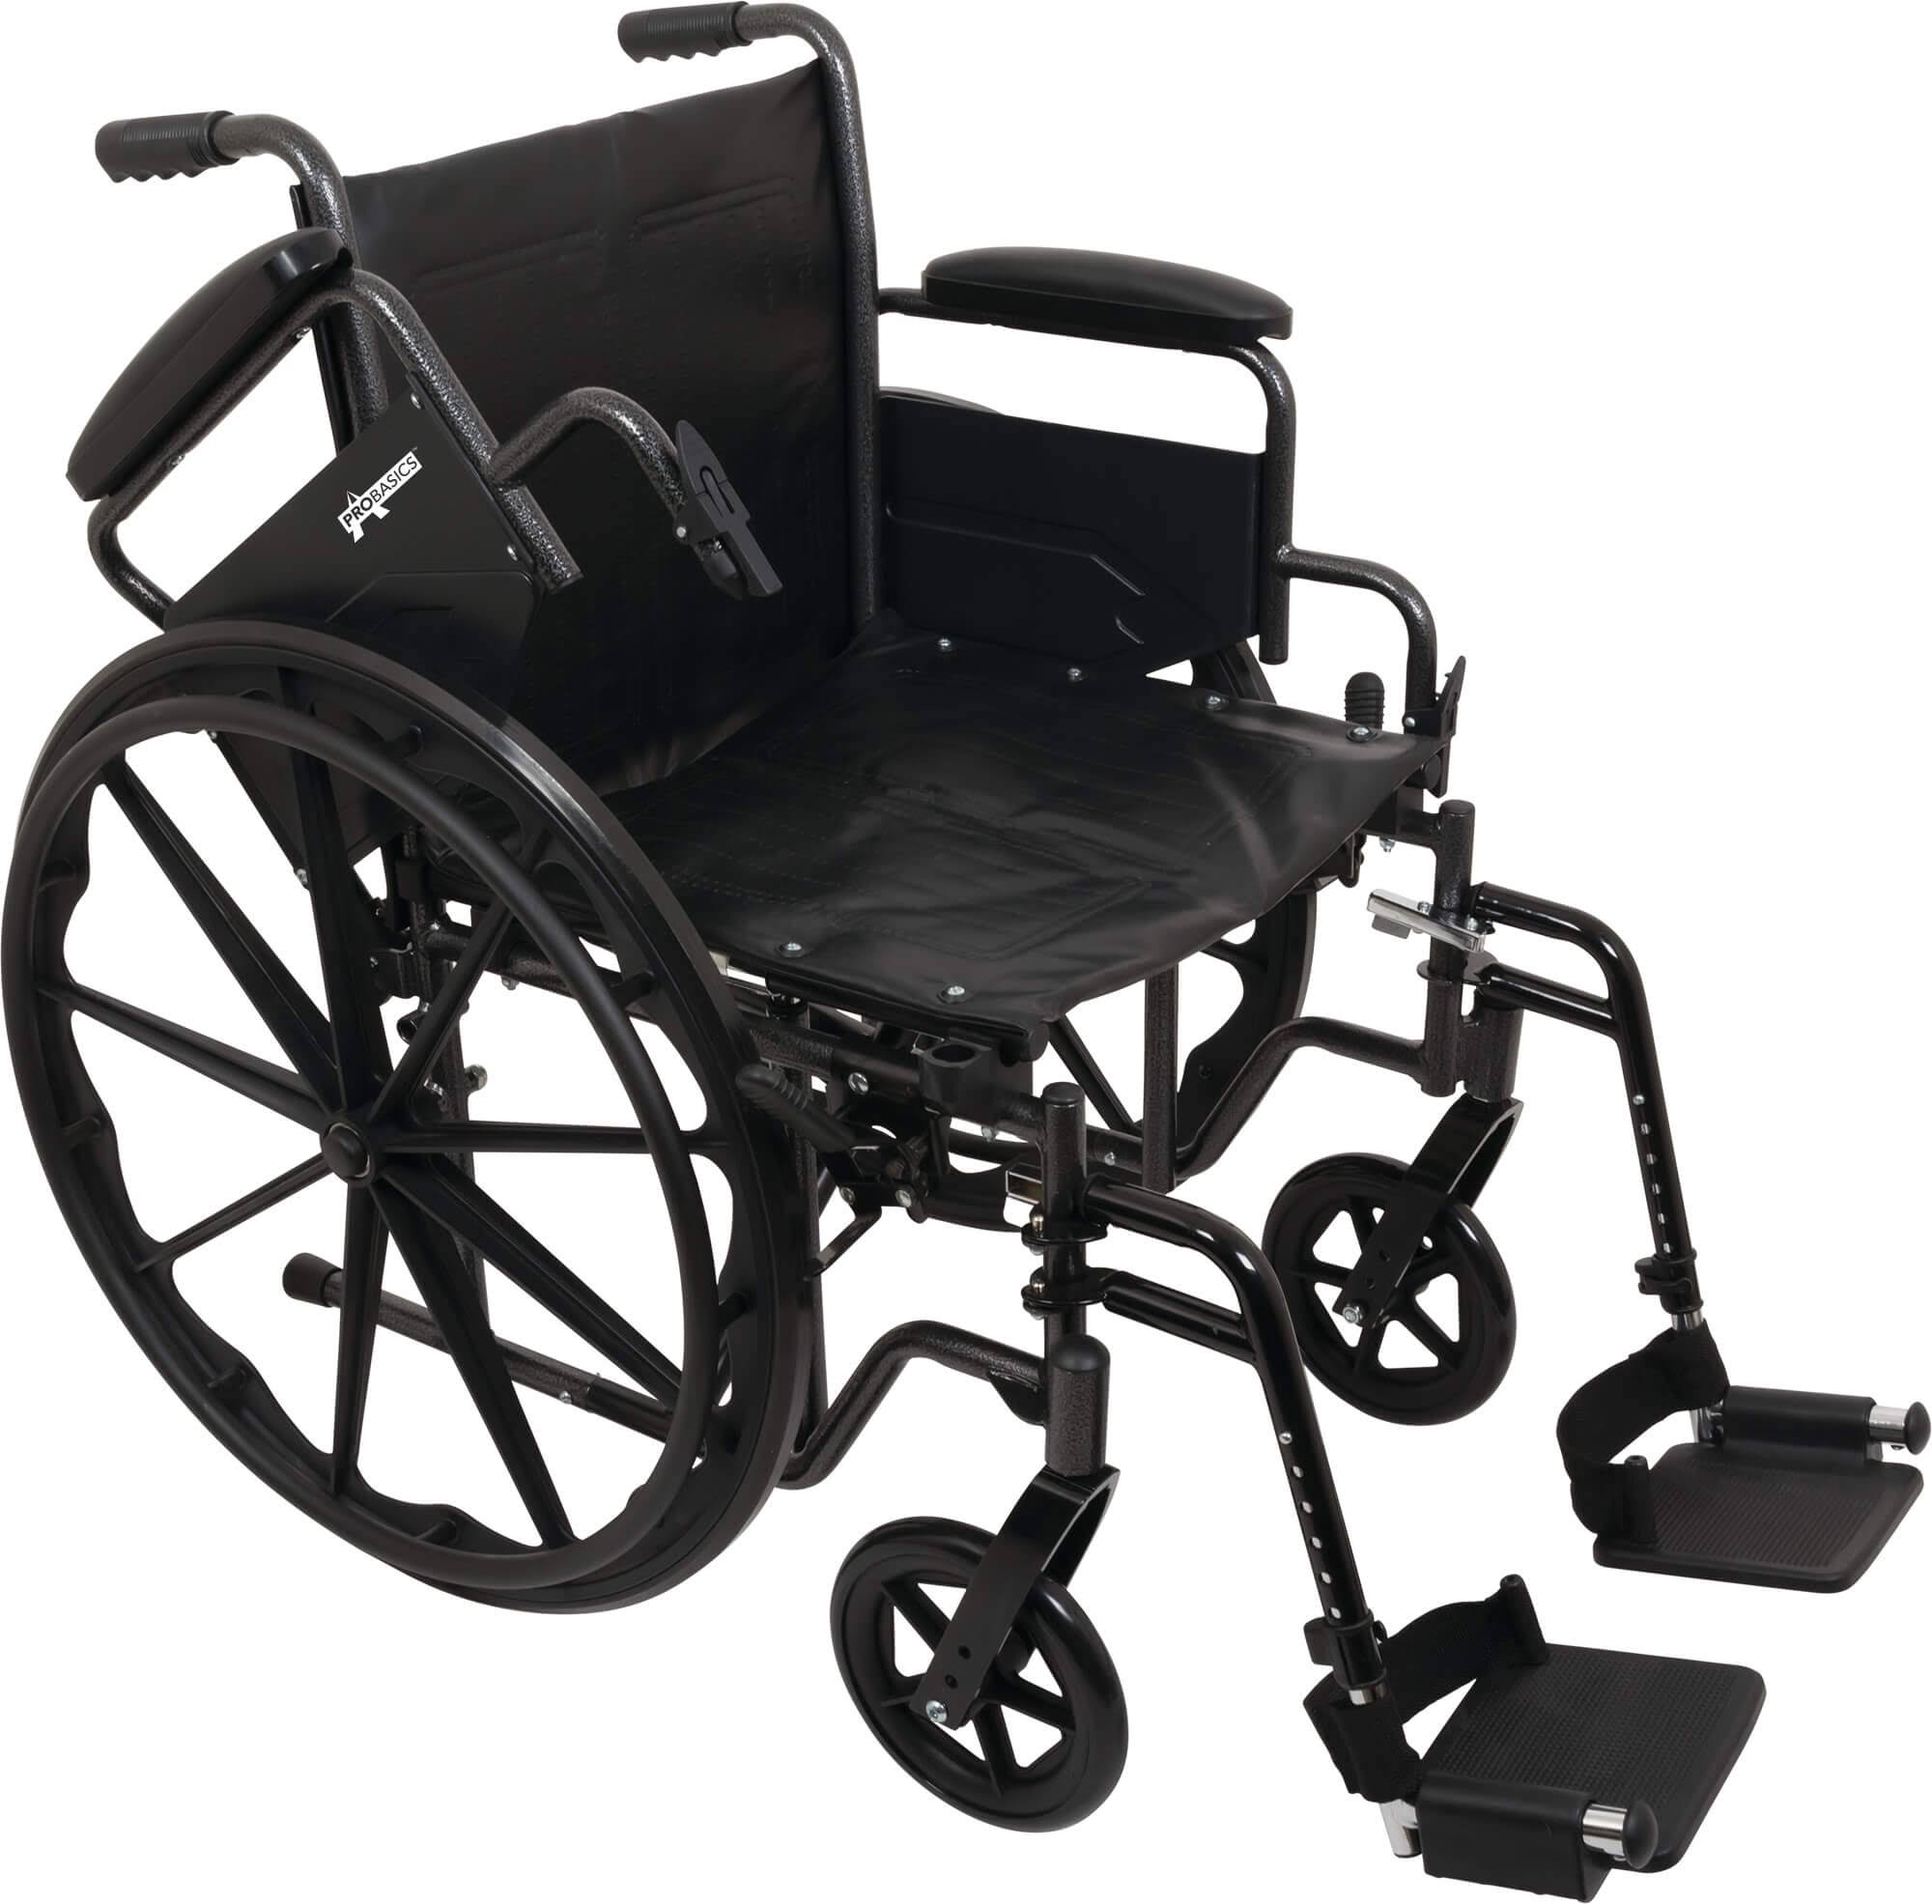 Probasics WC21816DE K2 Manual Wheelchair - Black, 18"